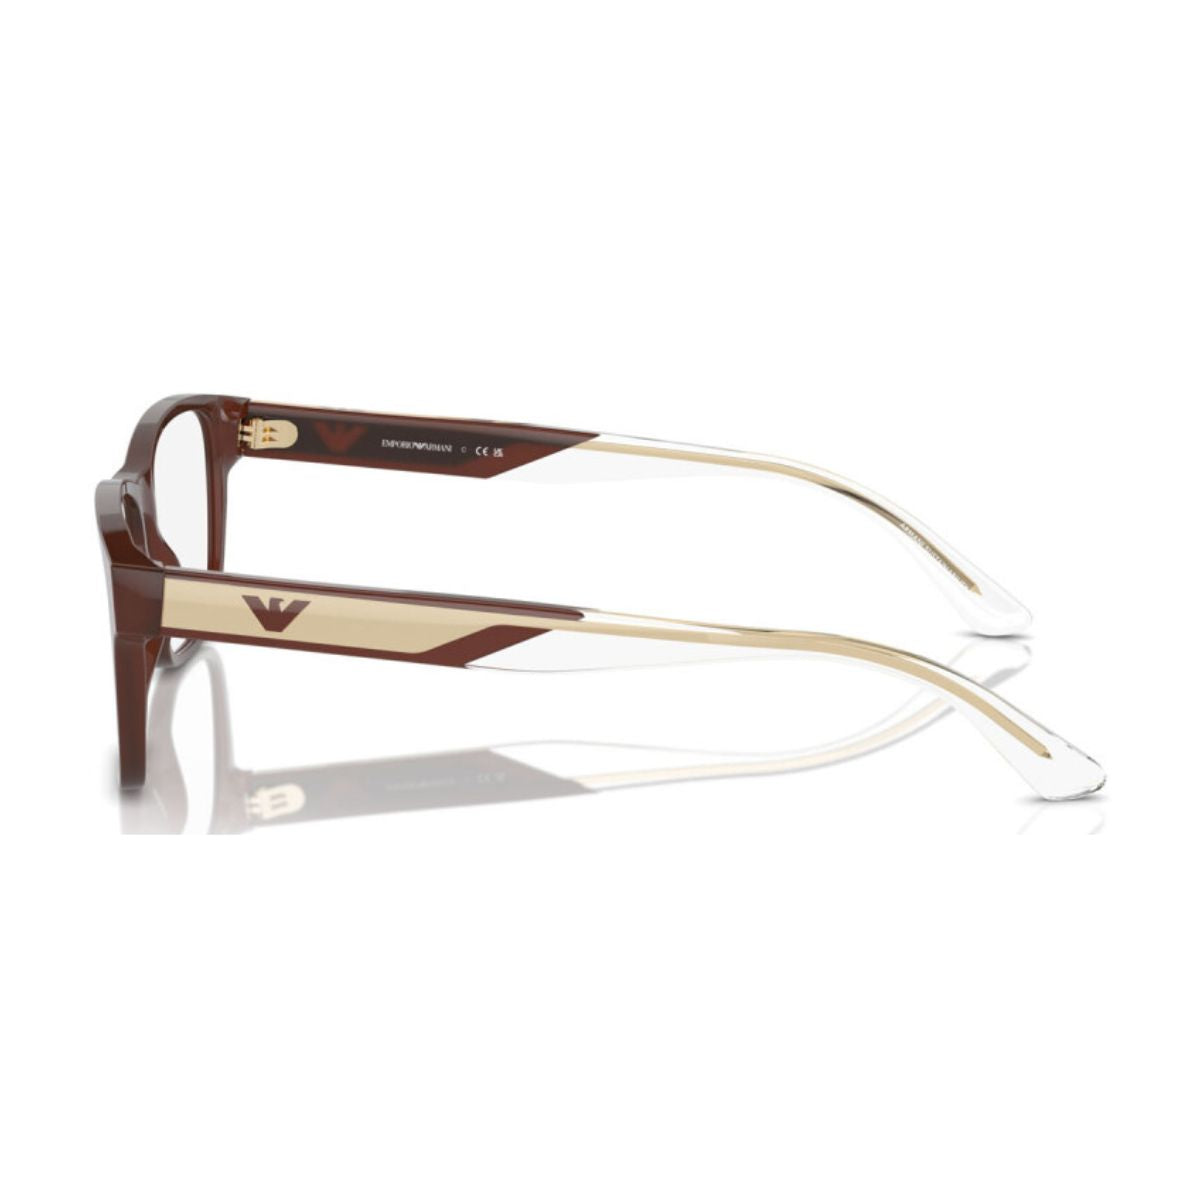 "Emporio Armani 3239 6095 Eyesight Glasses Frame For Men's At Optorium"